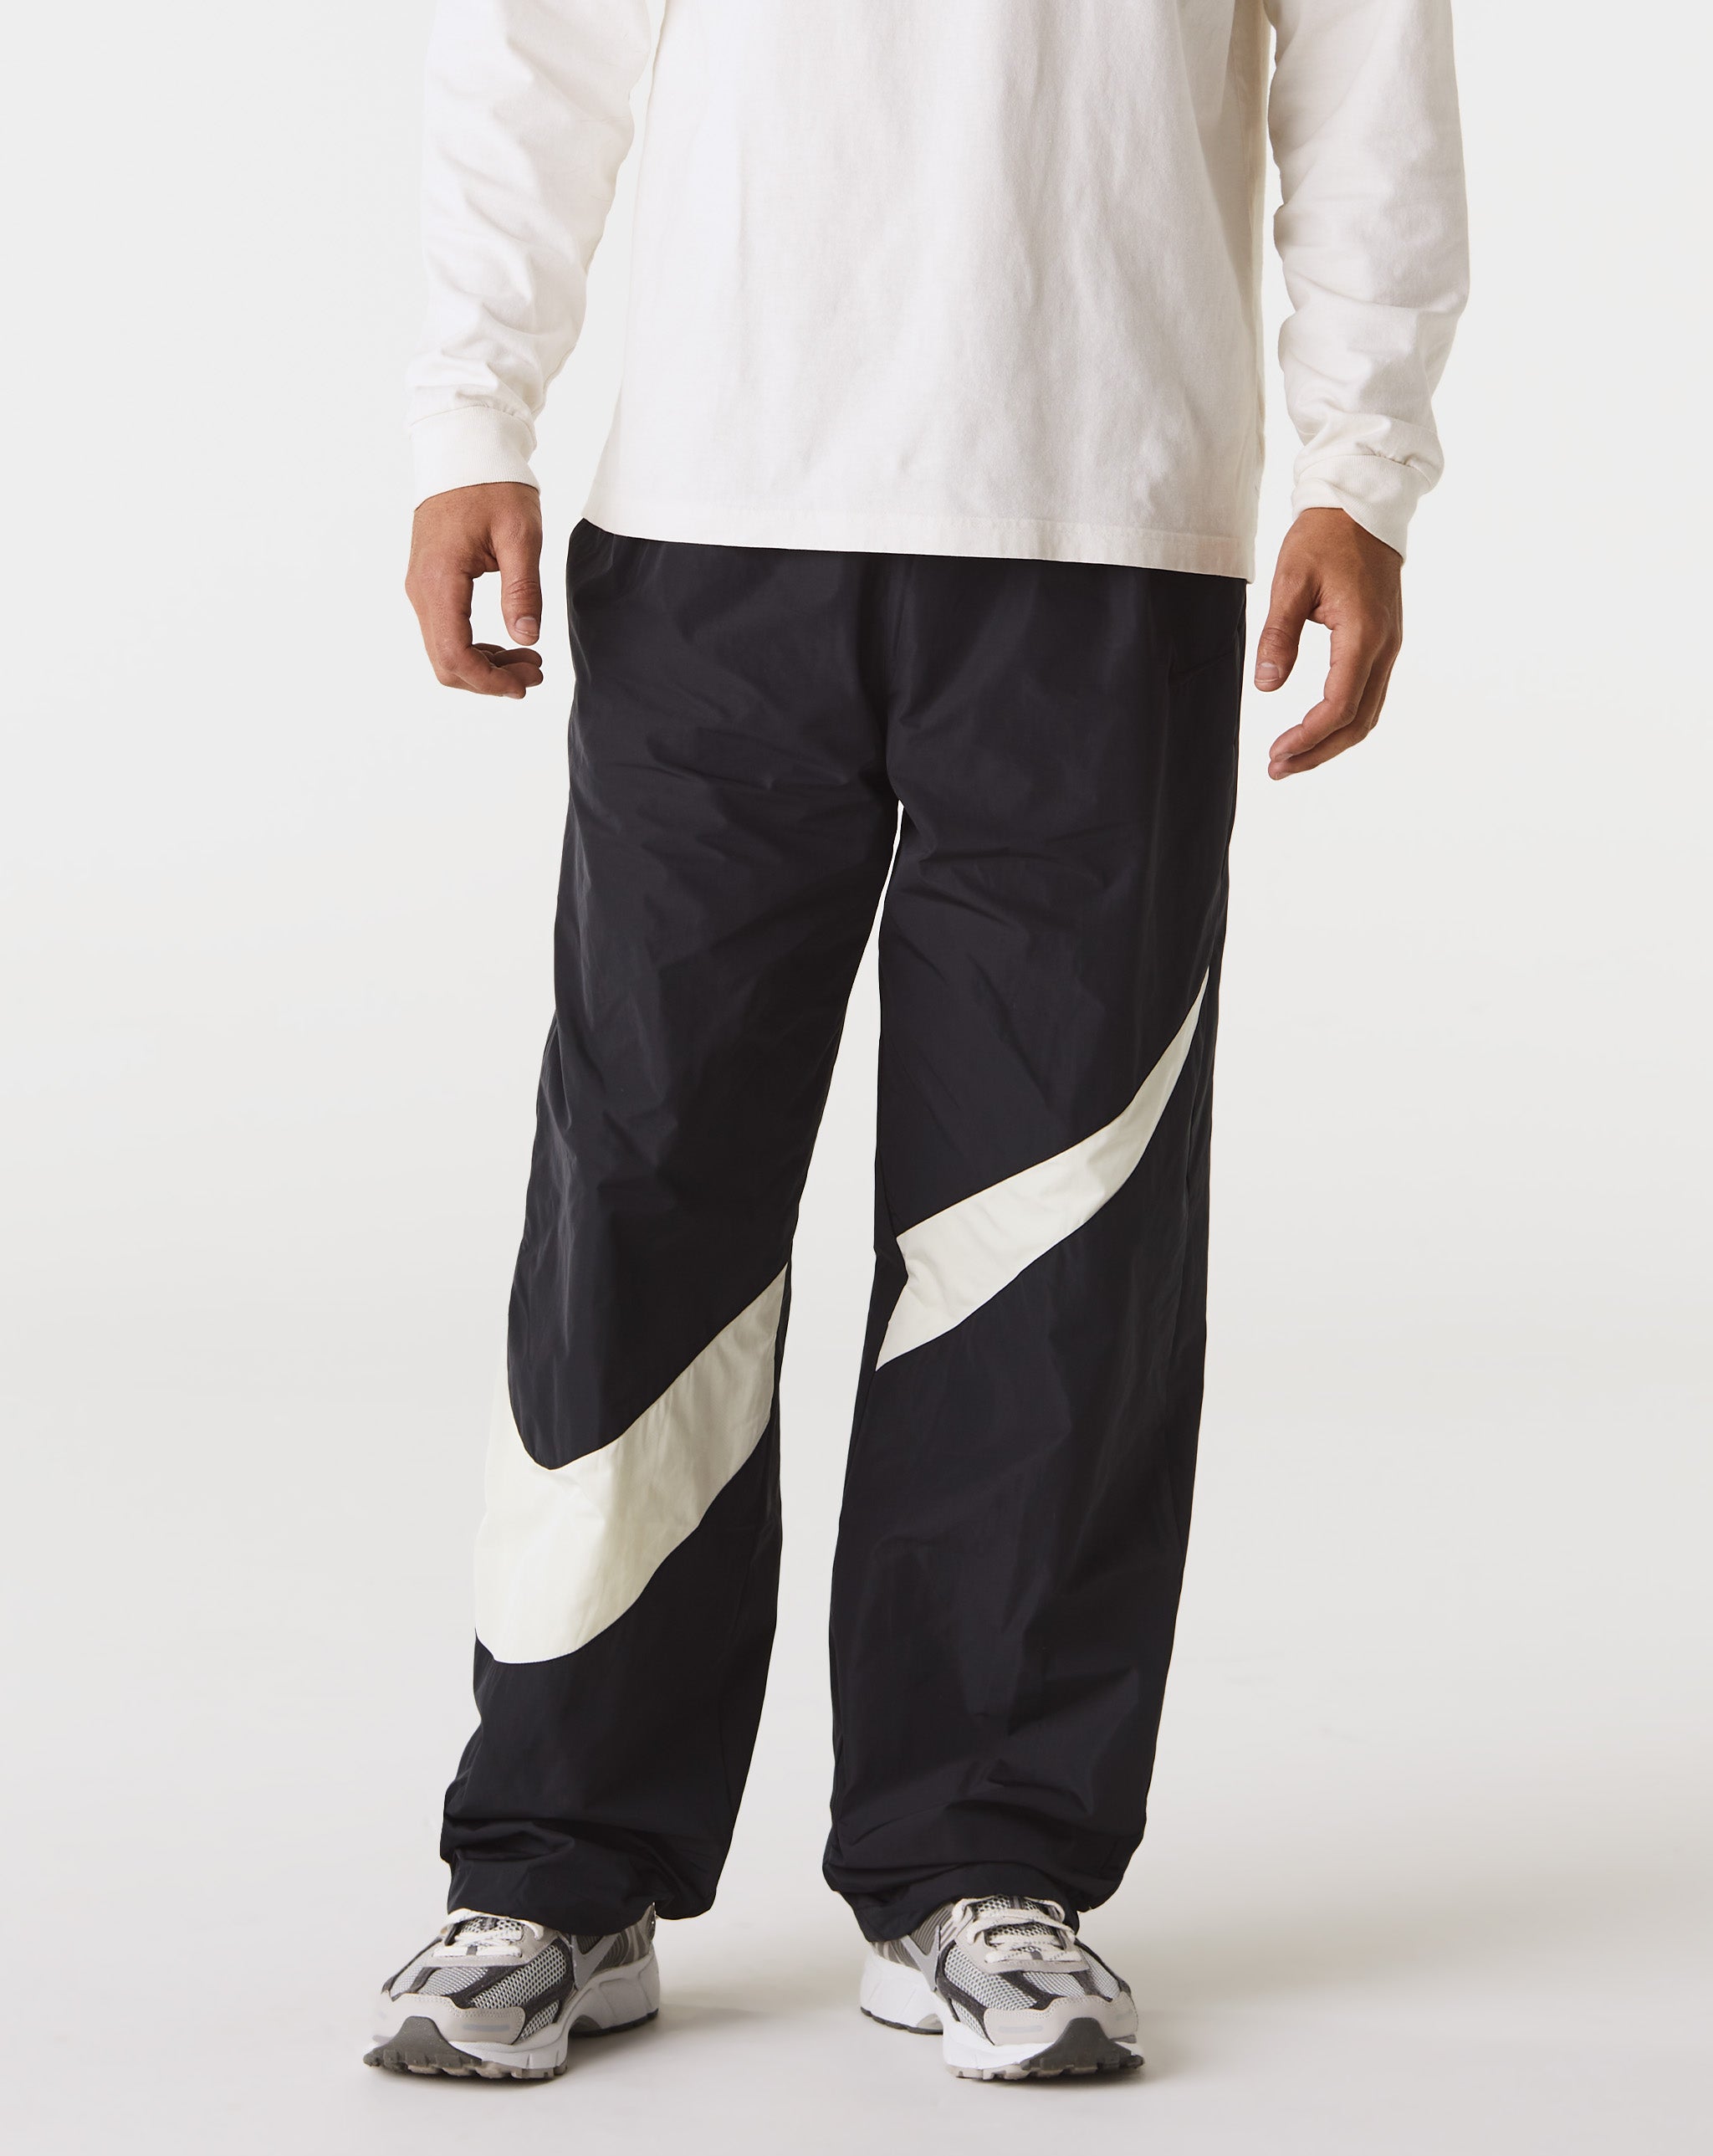 Nike Swoosh Woven Pants  - XHIBITION